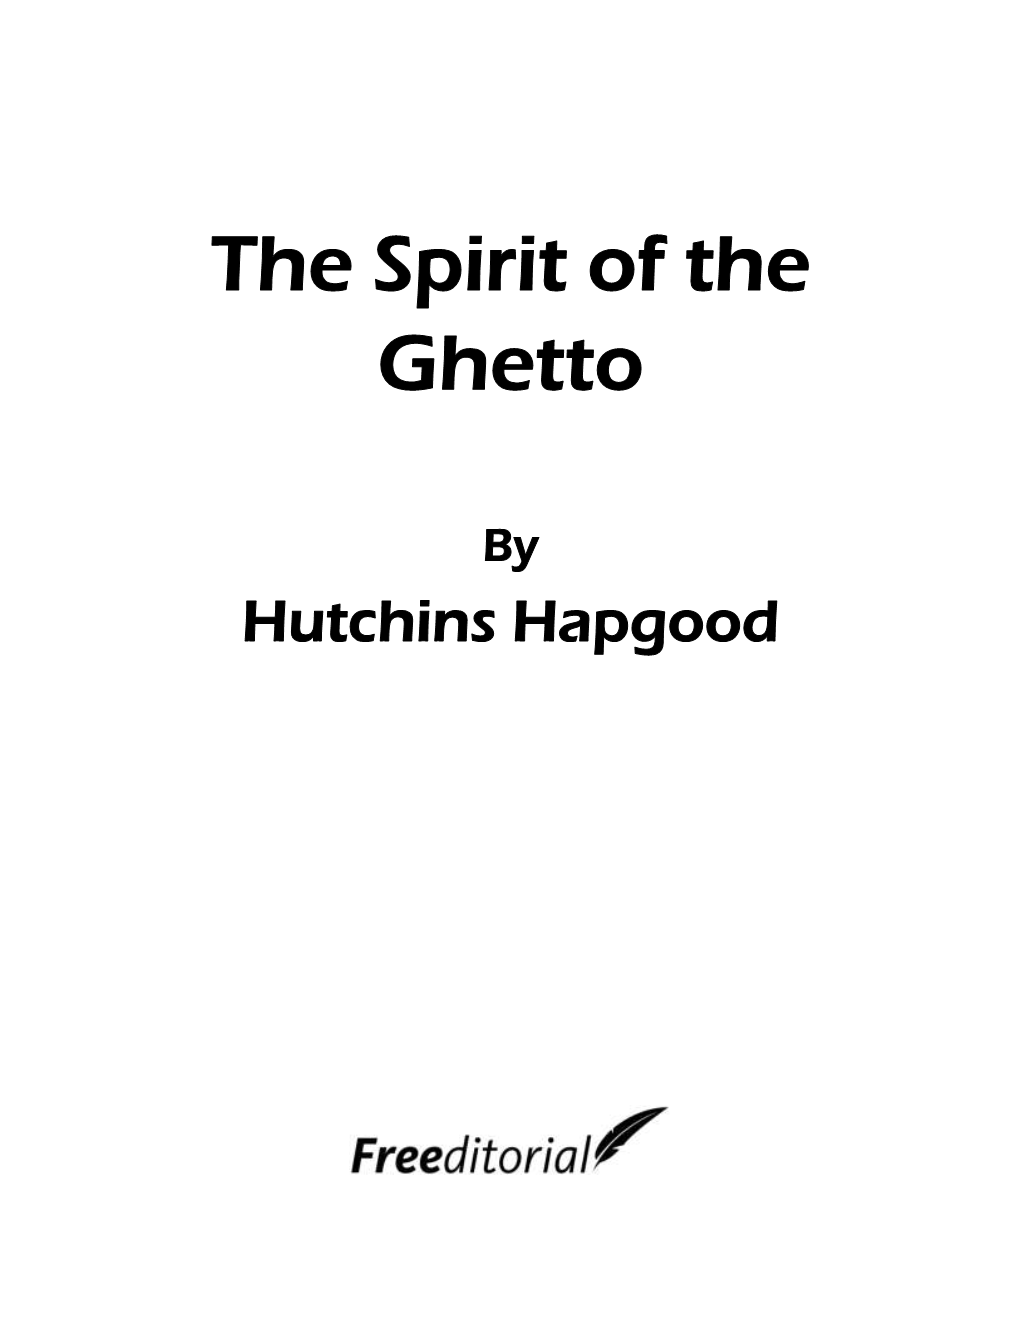 The Spirit of the Ghetto